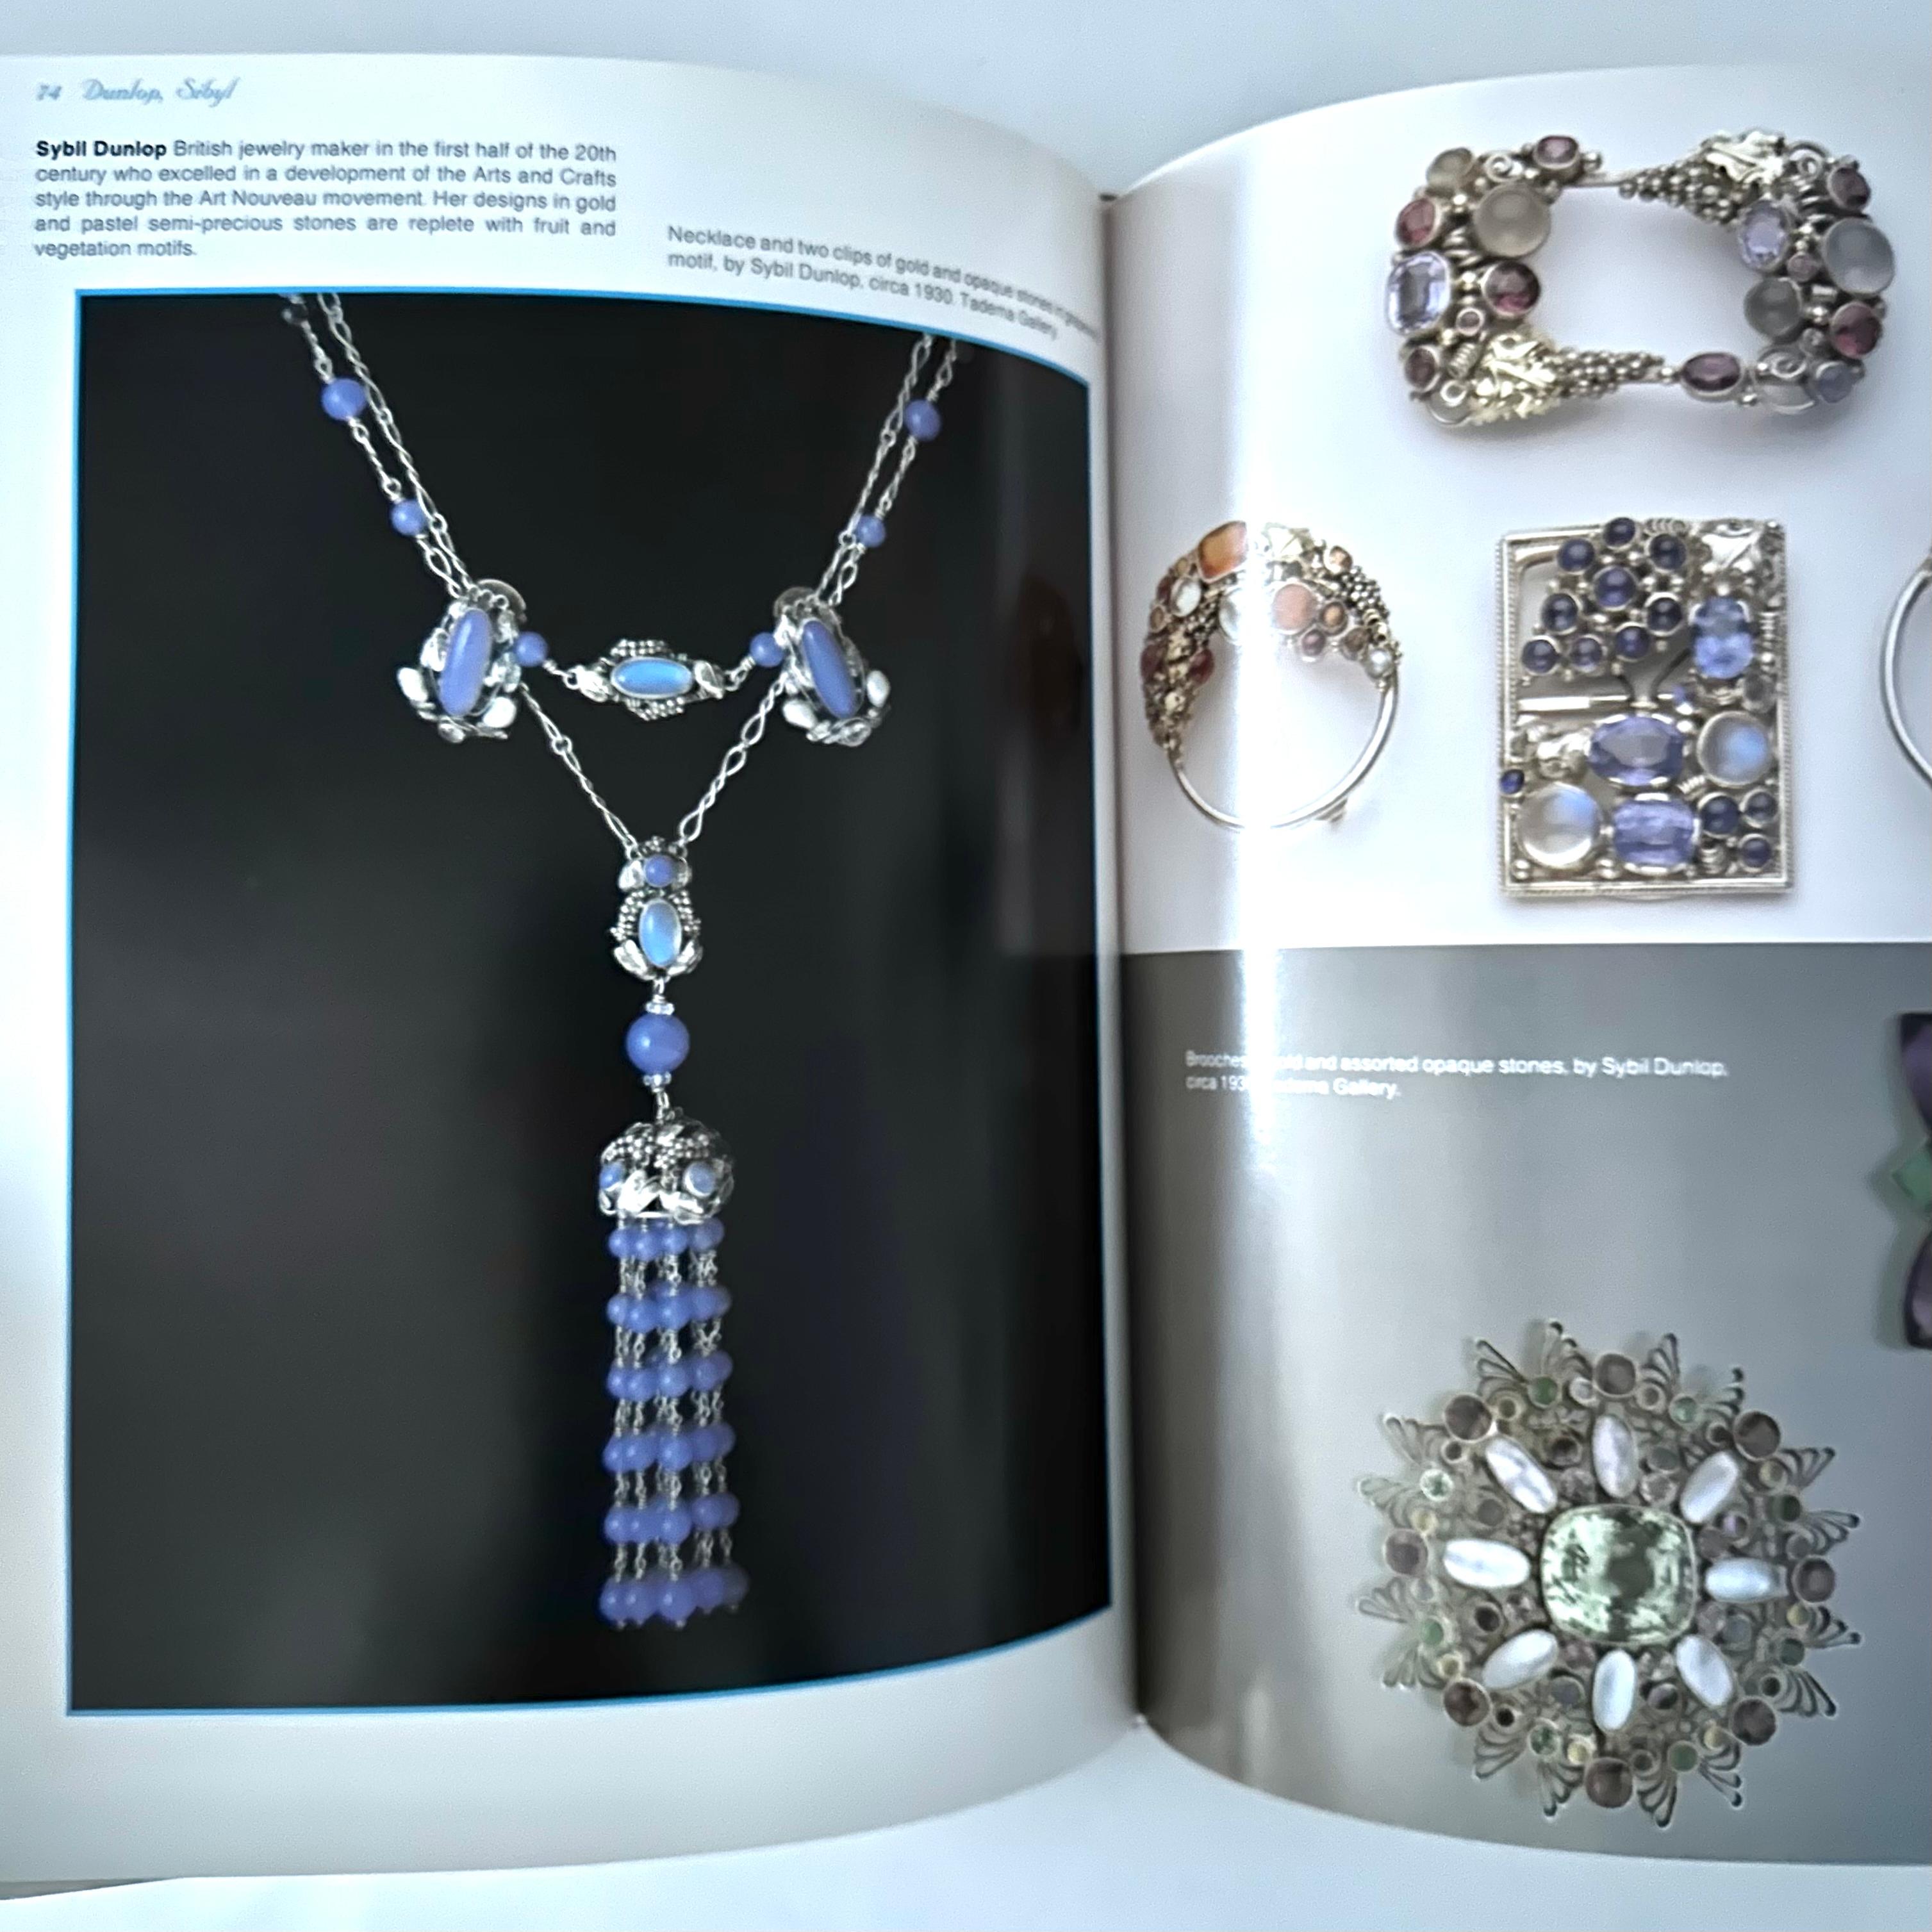 Handbook of Fine Jewelry - Nancy N. Schiffer - 1st edition, 1991 For Sale 1